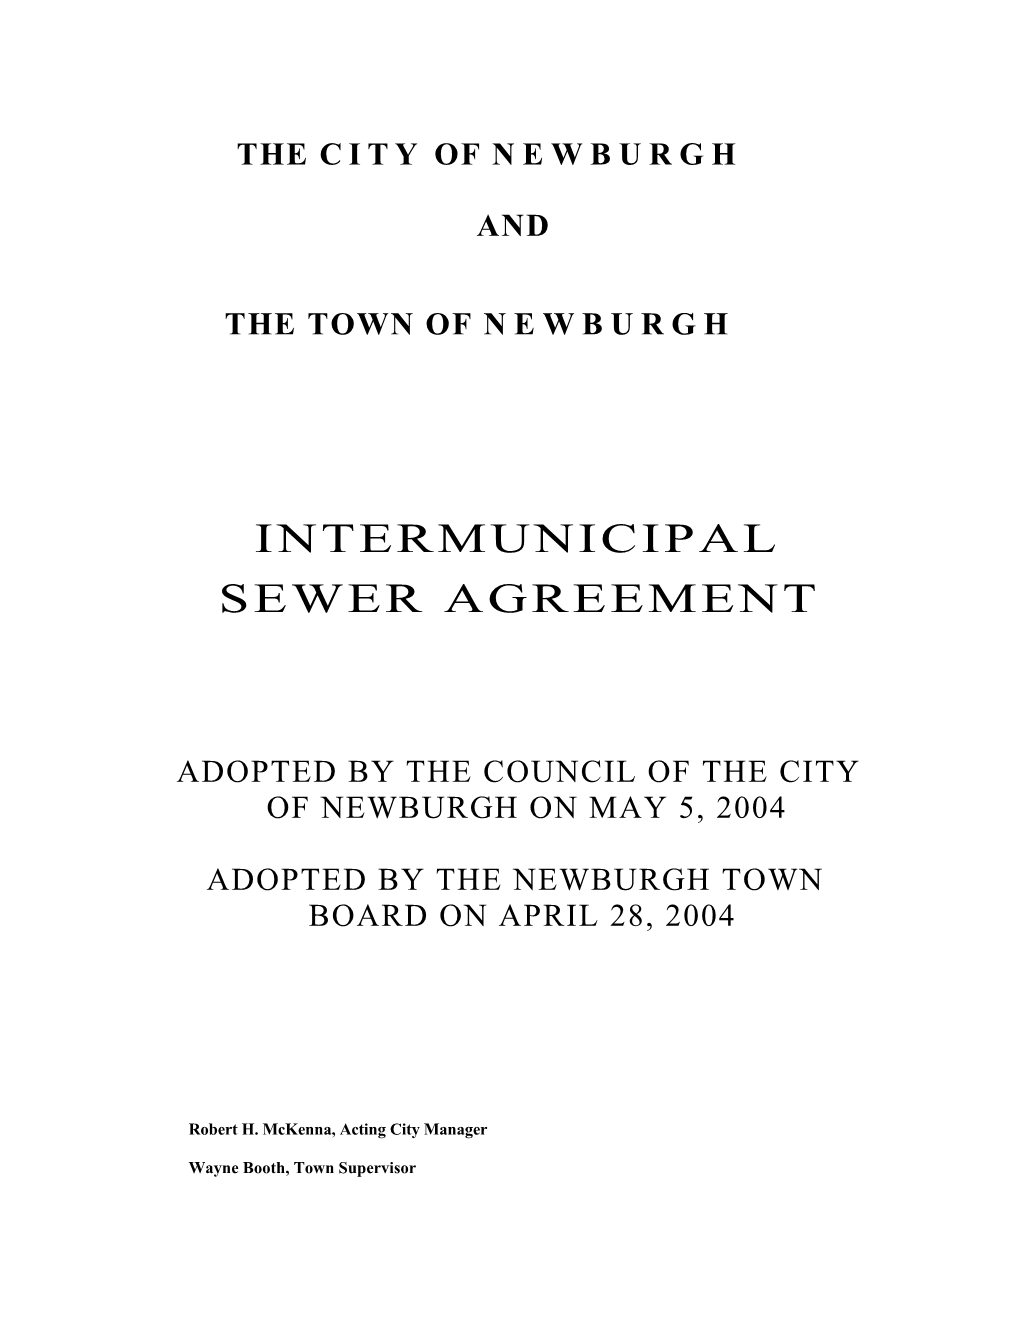 The City of Newburgh